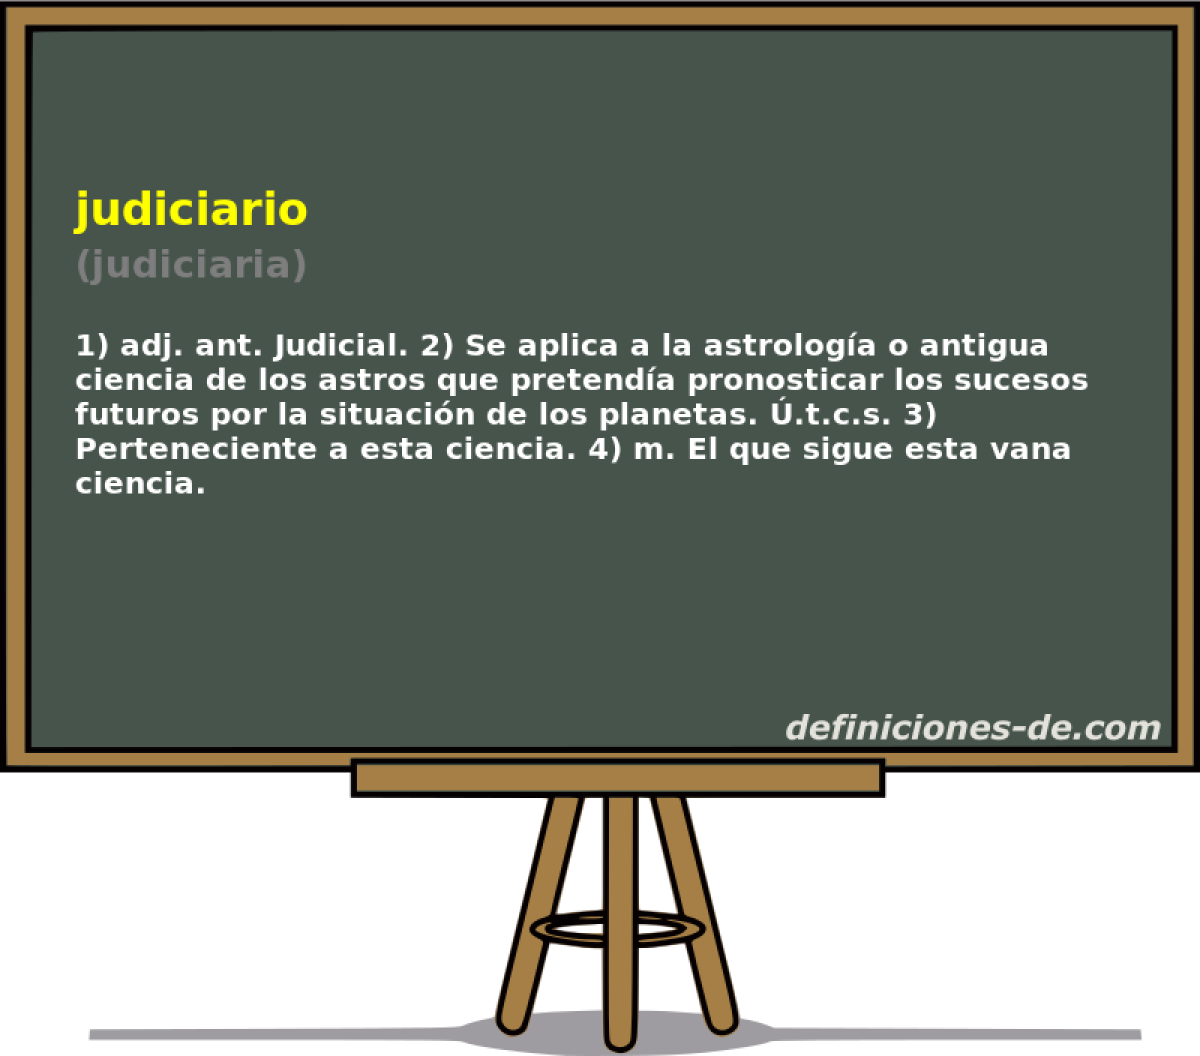 judiciario (judiciaria)